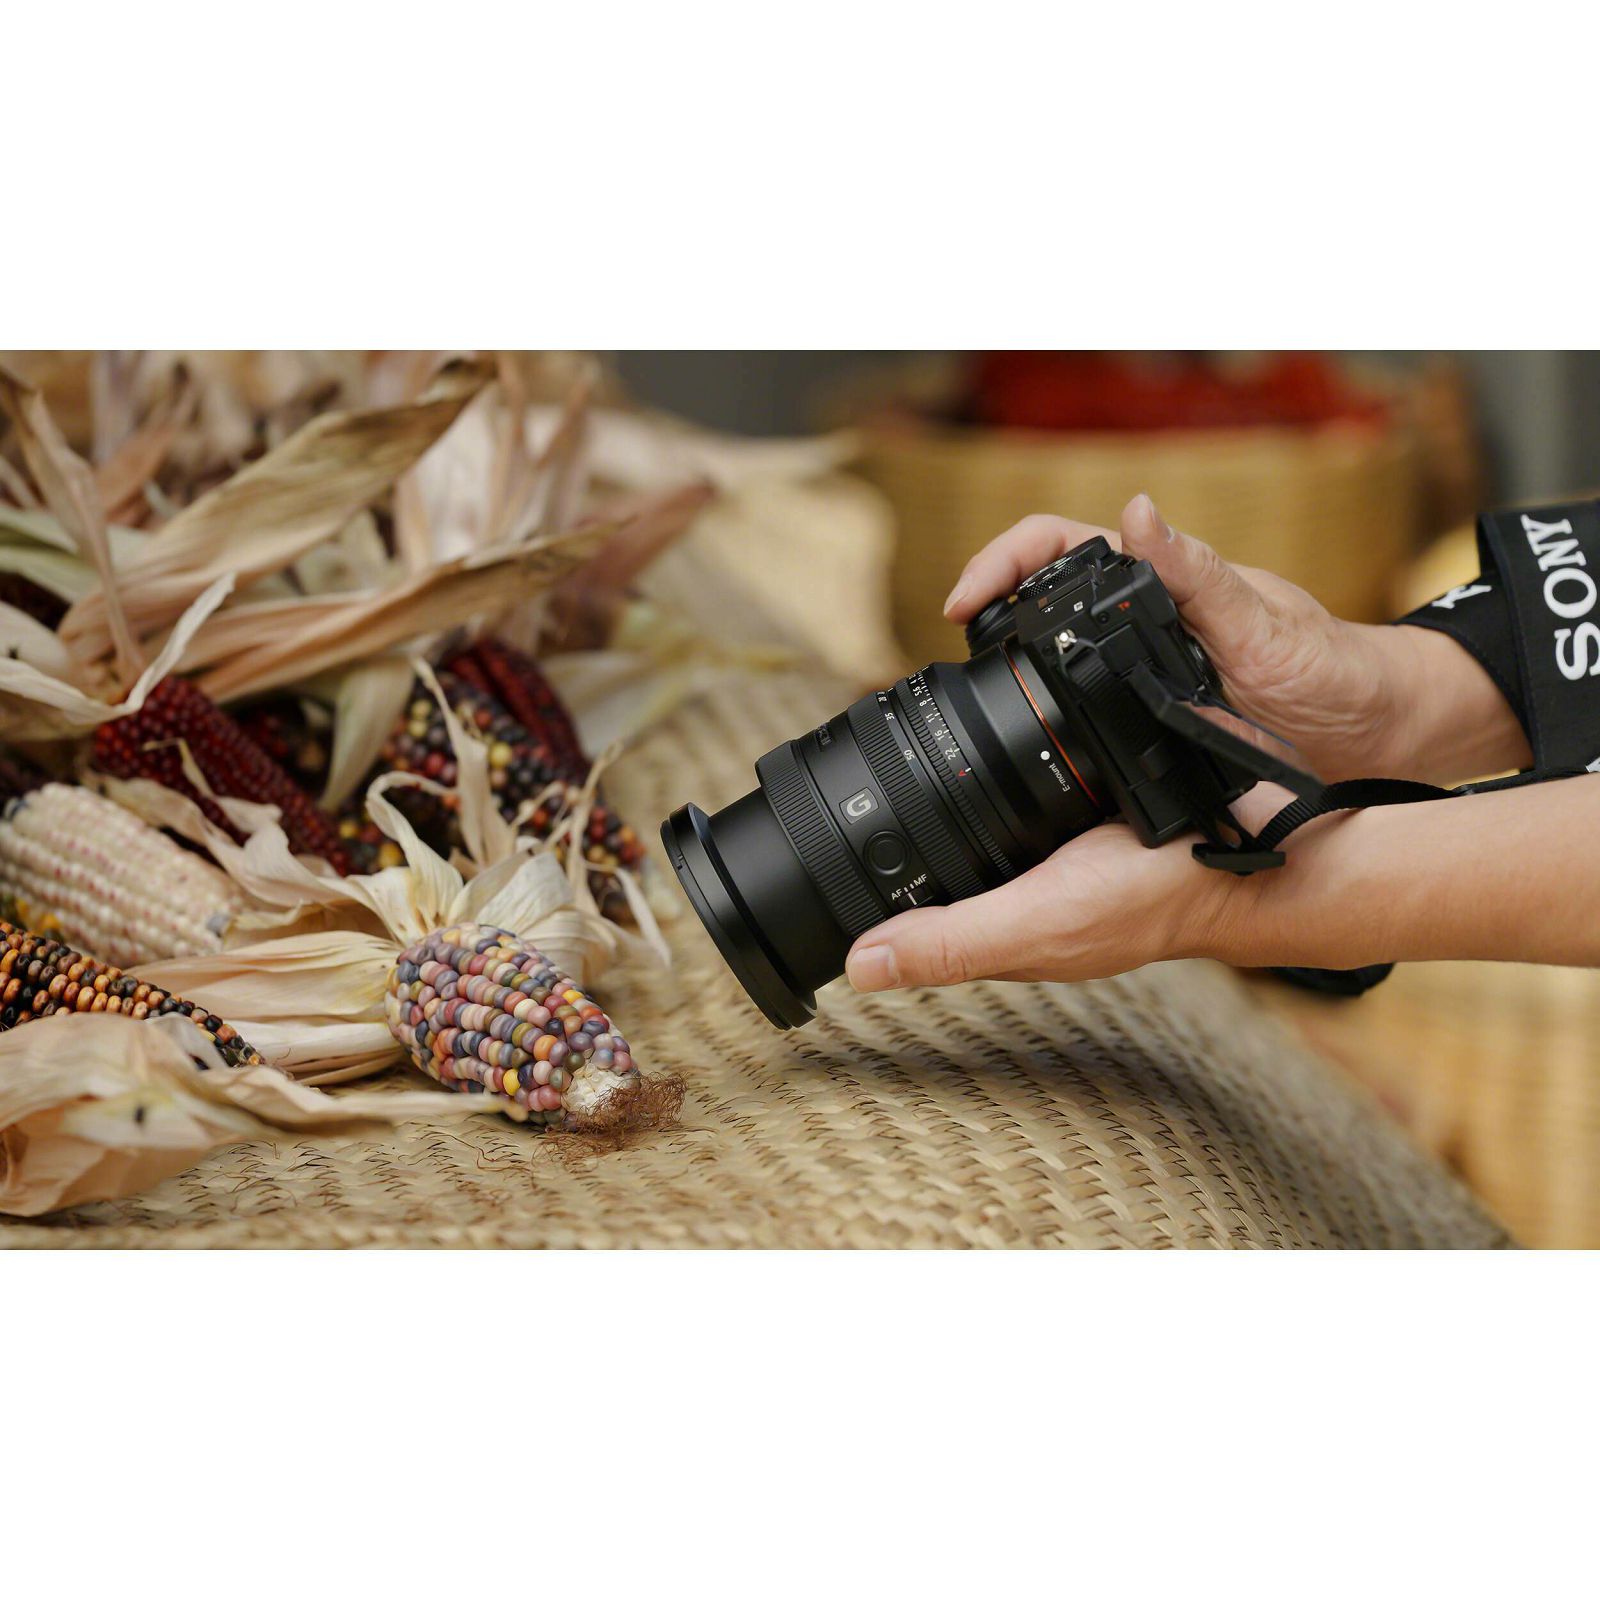 Sony FE 24-50mm f/2.8 G standardni objektiv za E-Mount